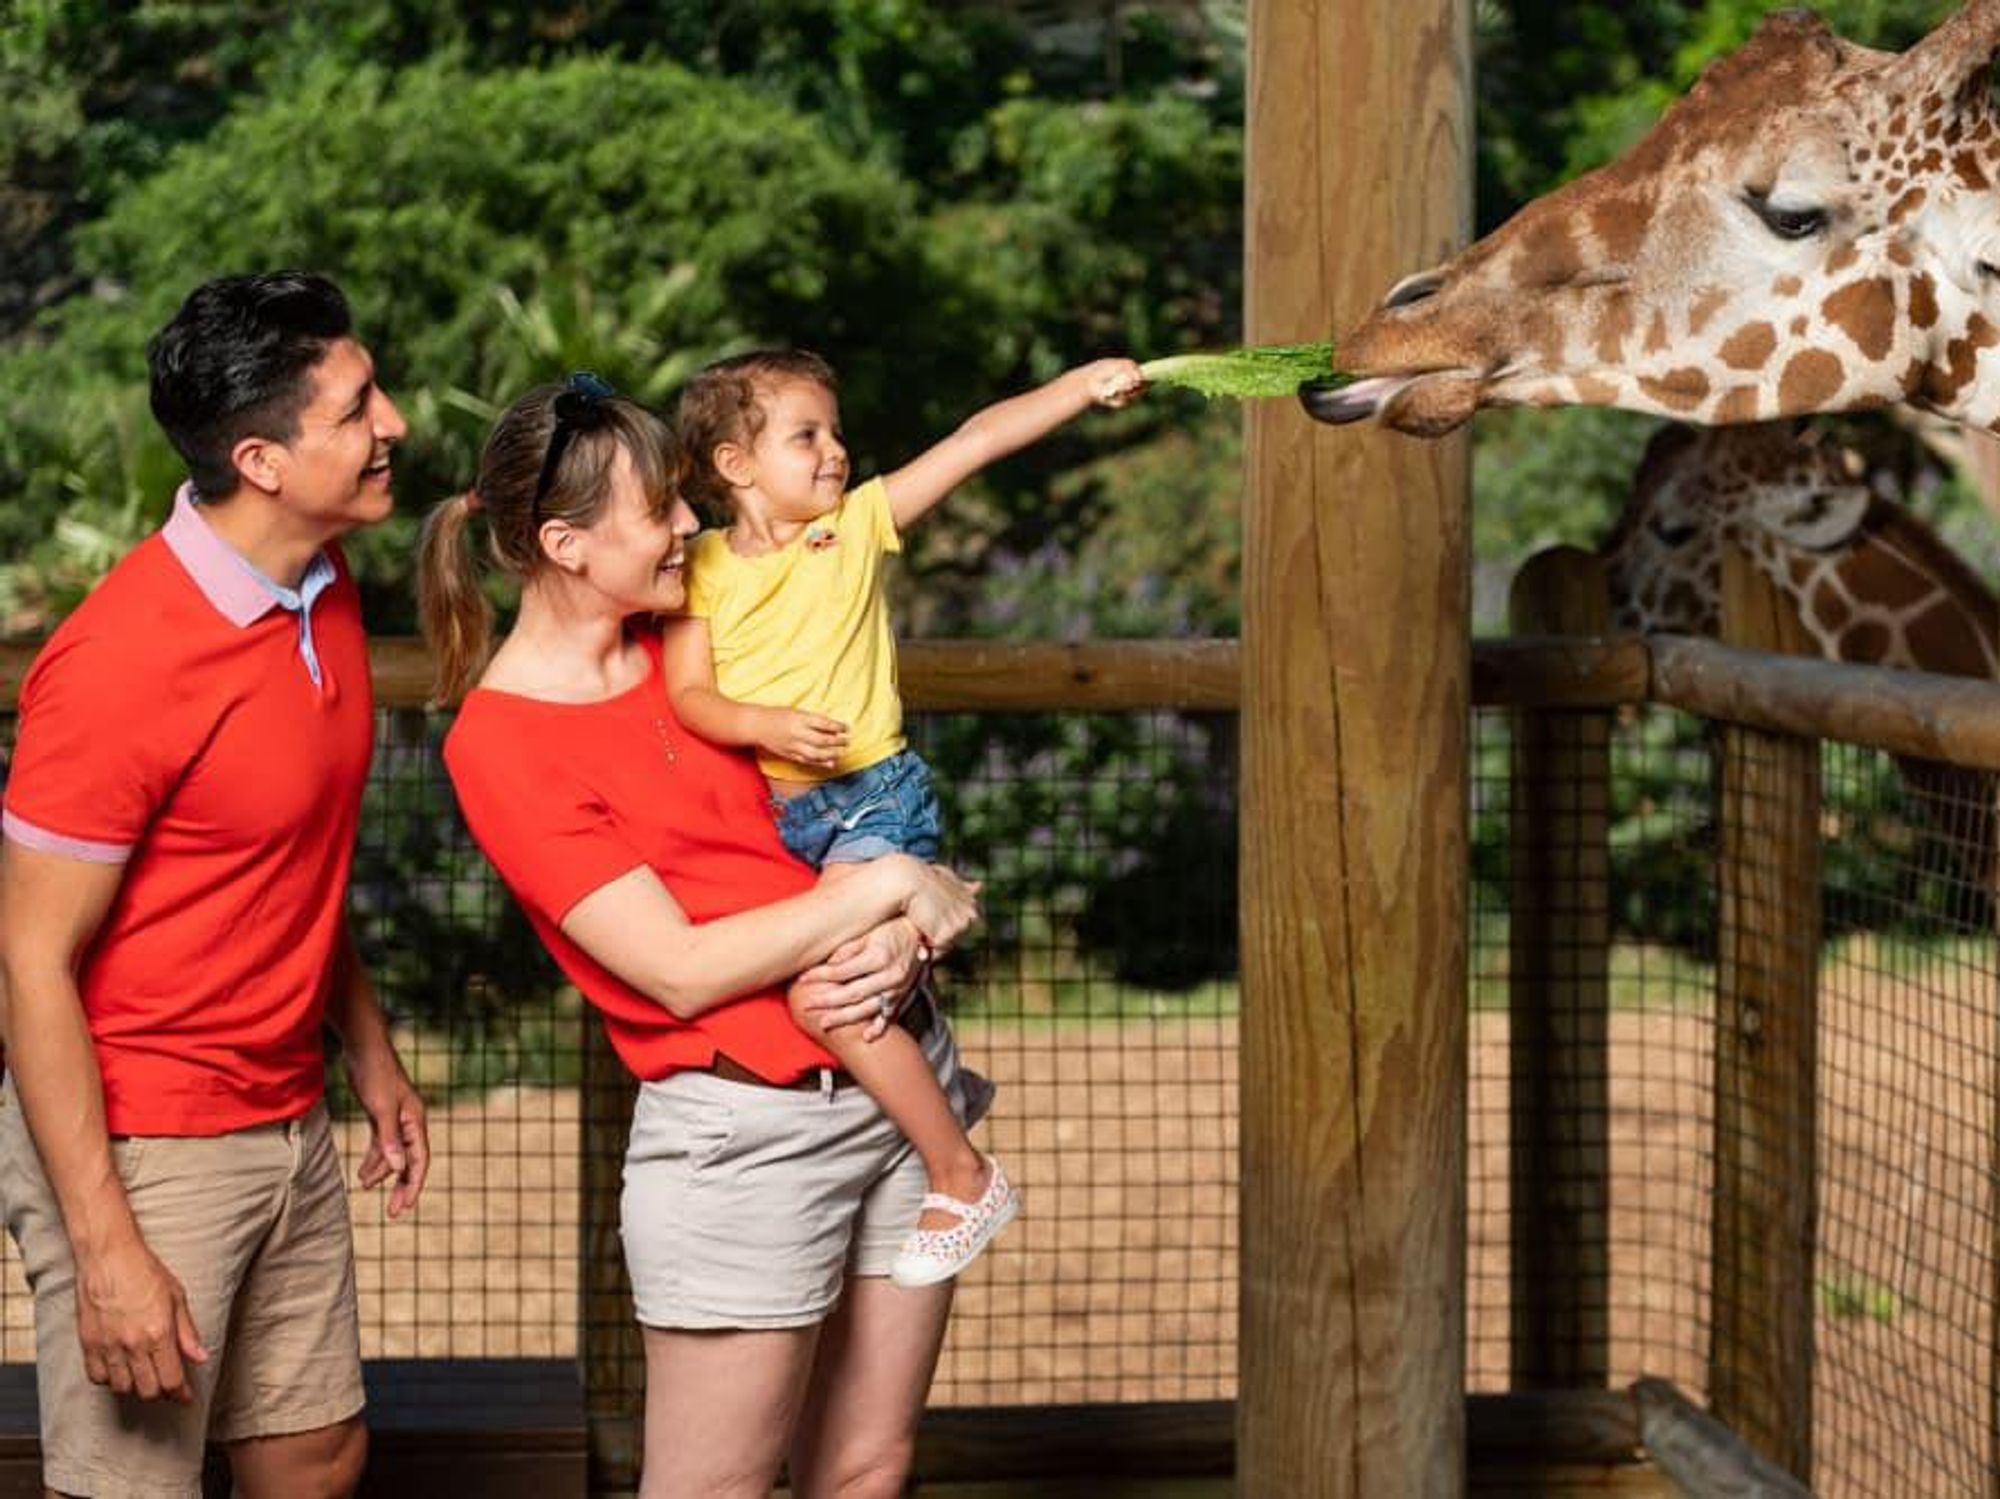 At San Antonio Zoo, you can feed the giraffes.